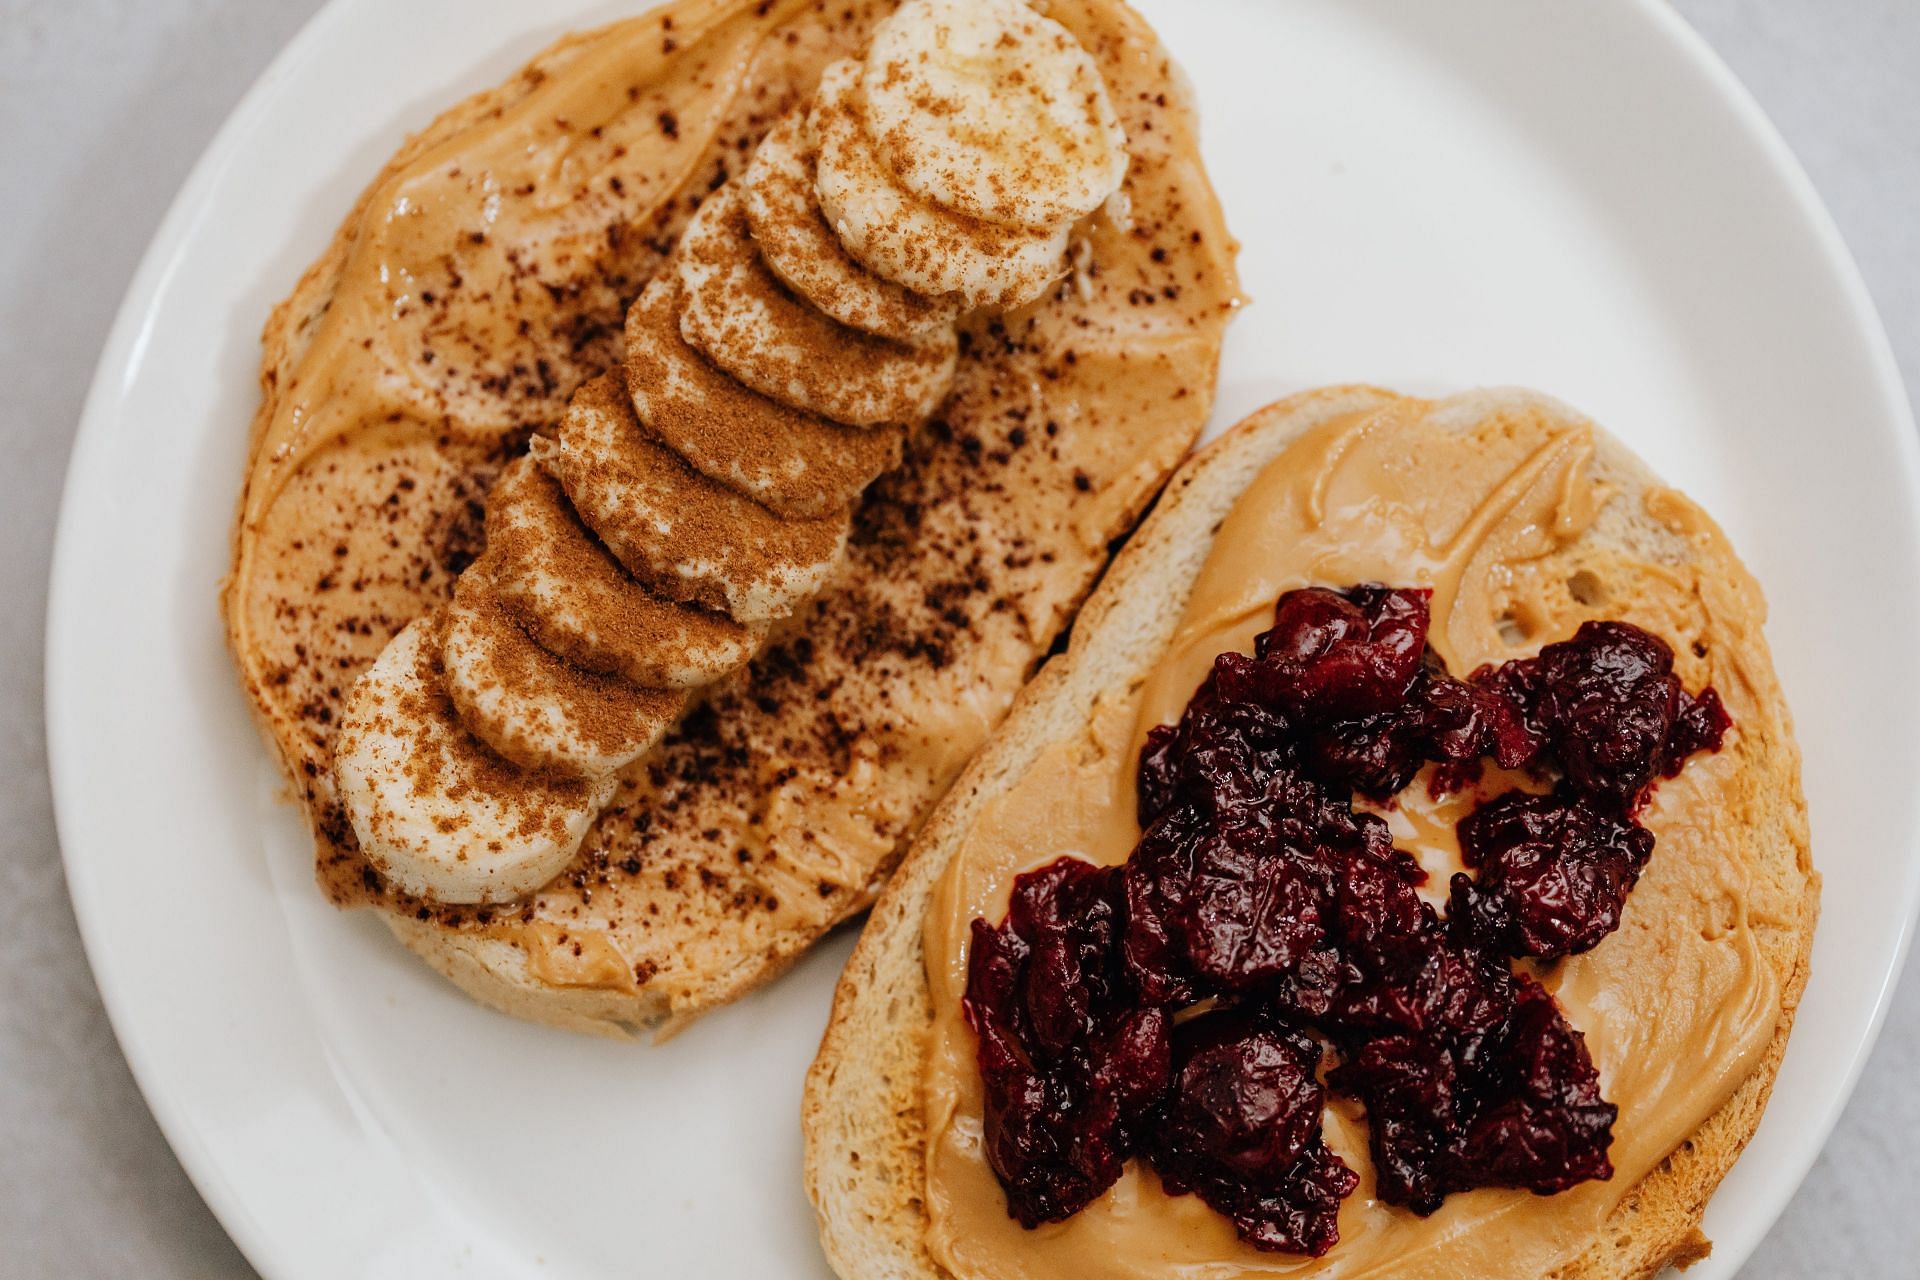 Eating peanut butter benefits (Image sourced via Pexels / Photo by Karolina)